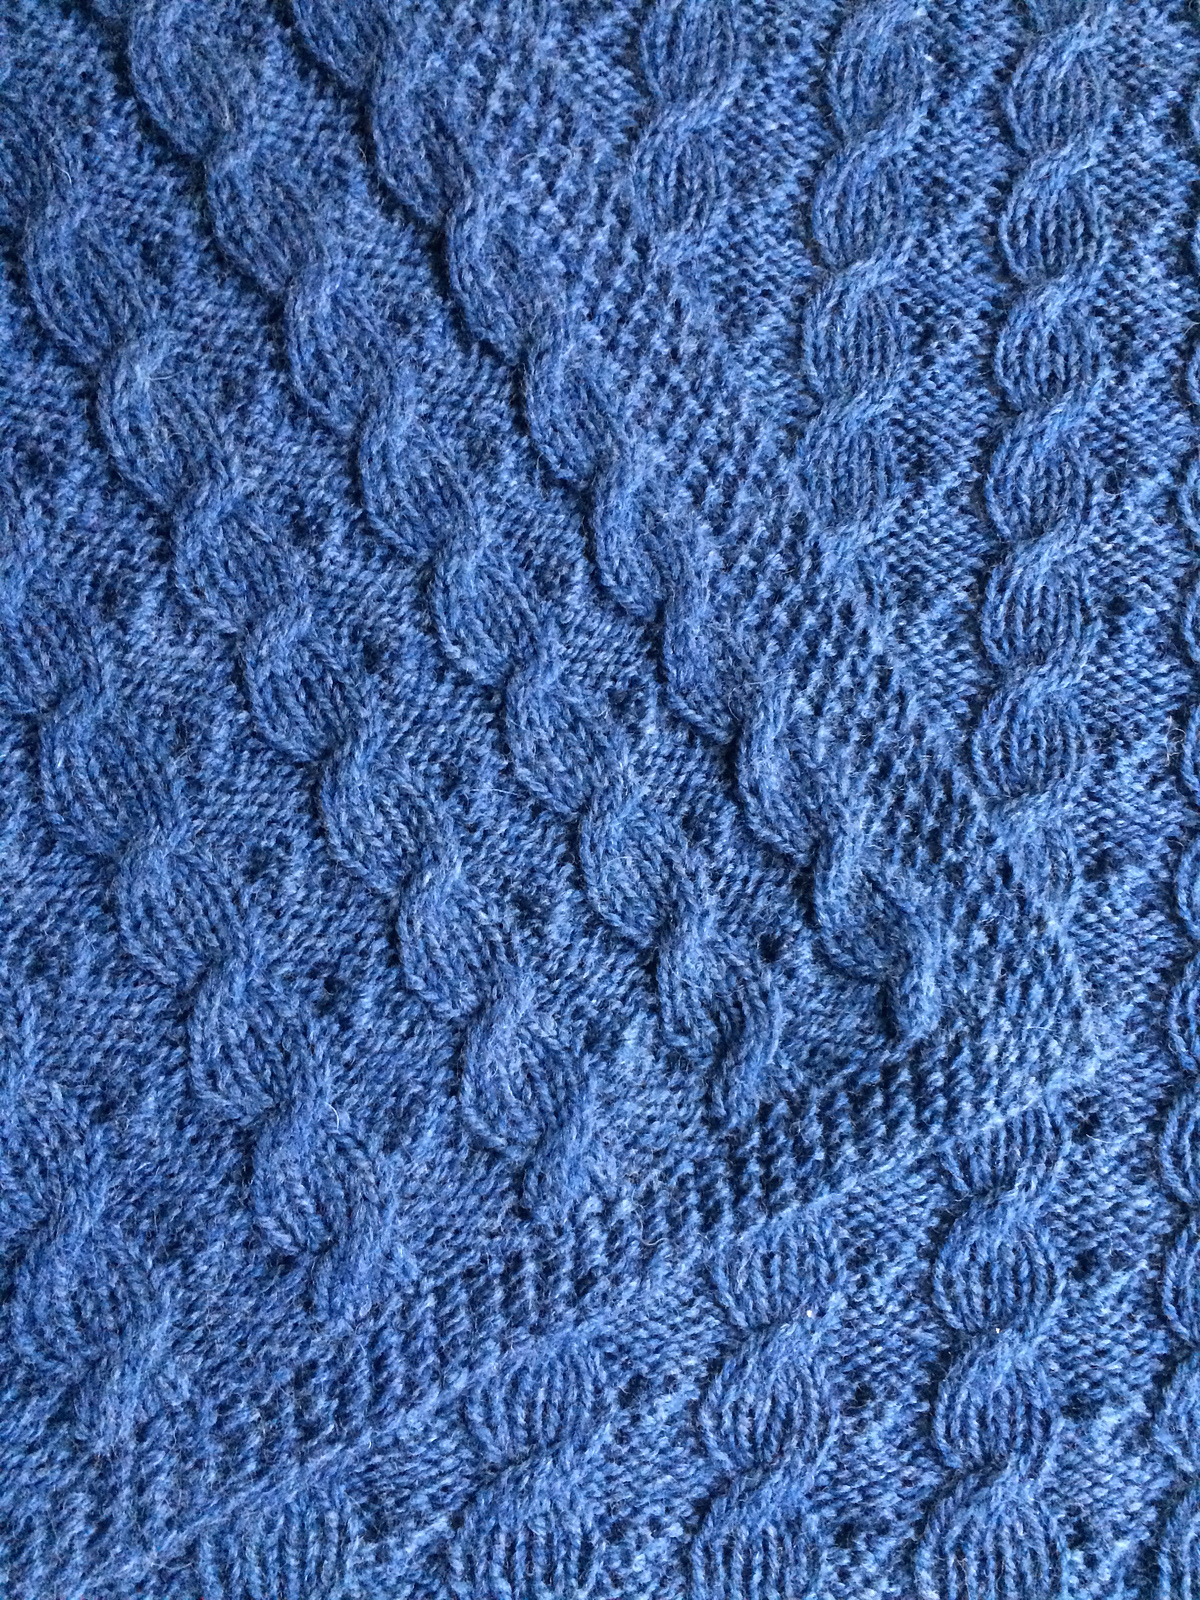 Free Knitting Afghan Patterns For Beginners Reversible Blanket Knitting Patterns In The Loop Knitting